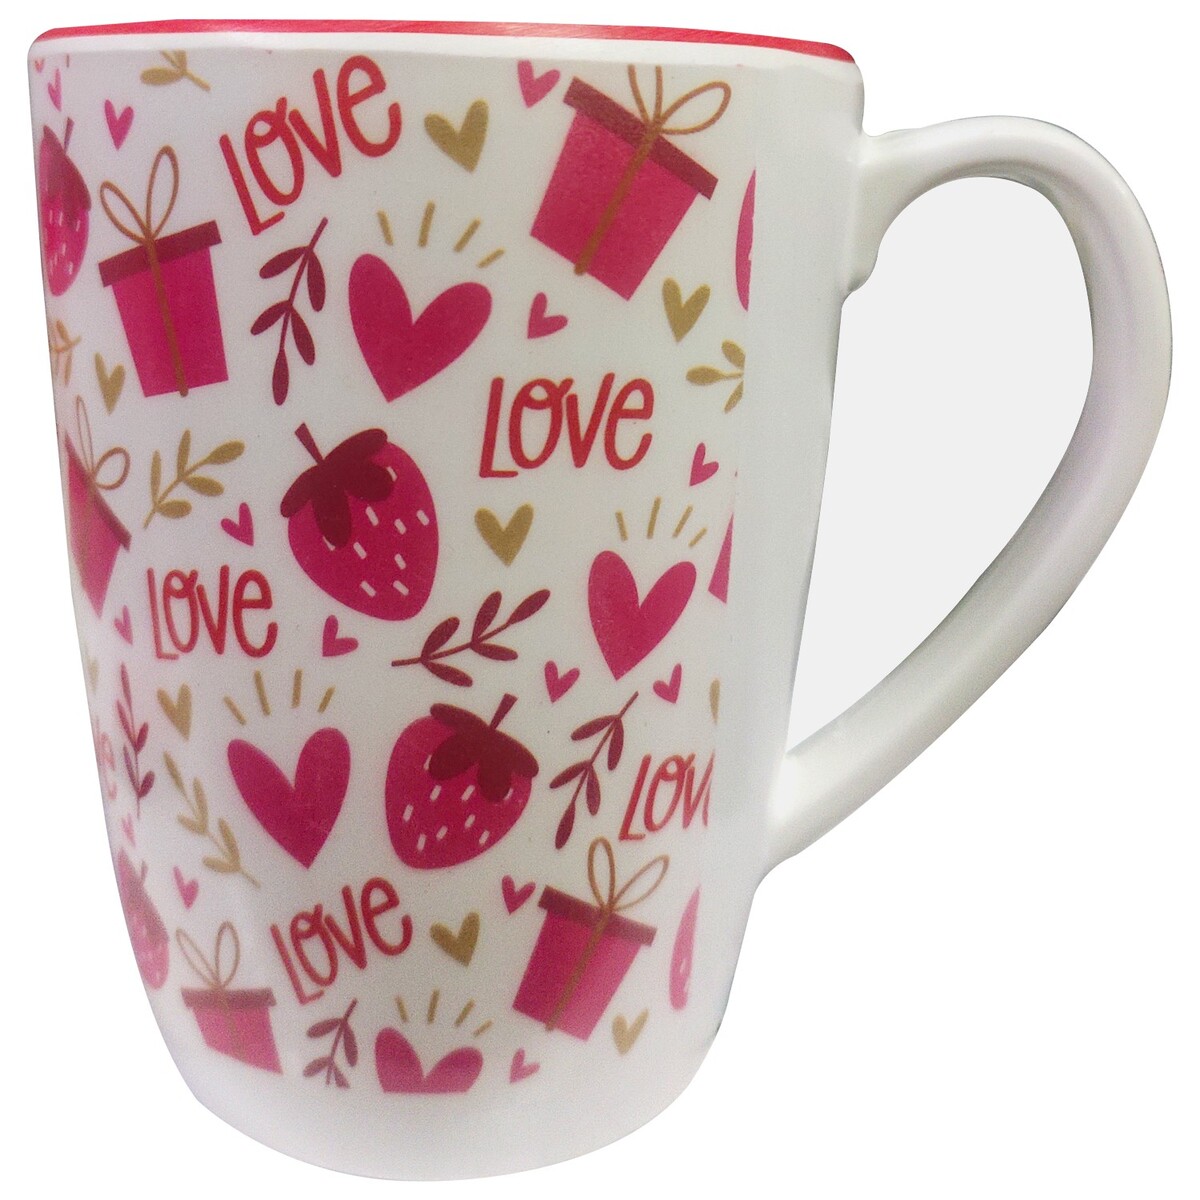 Superware Valentine Two Tone Coffee Mug Assorted Designs